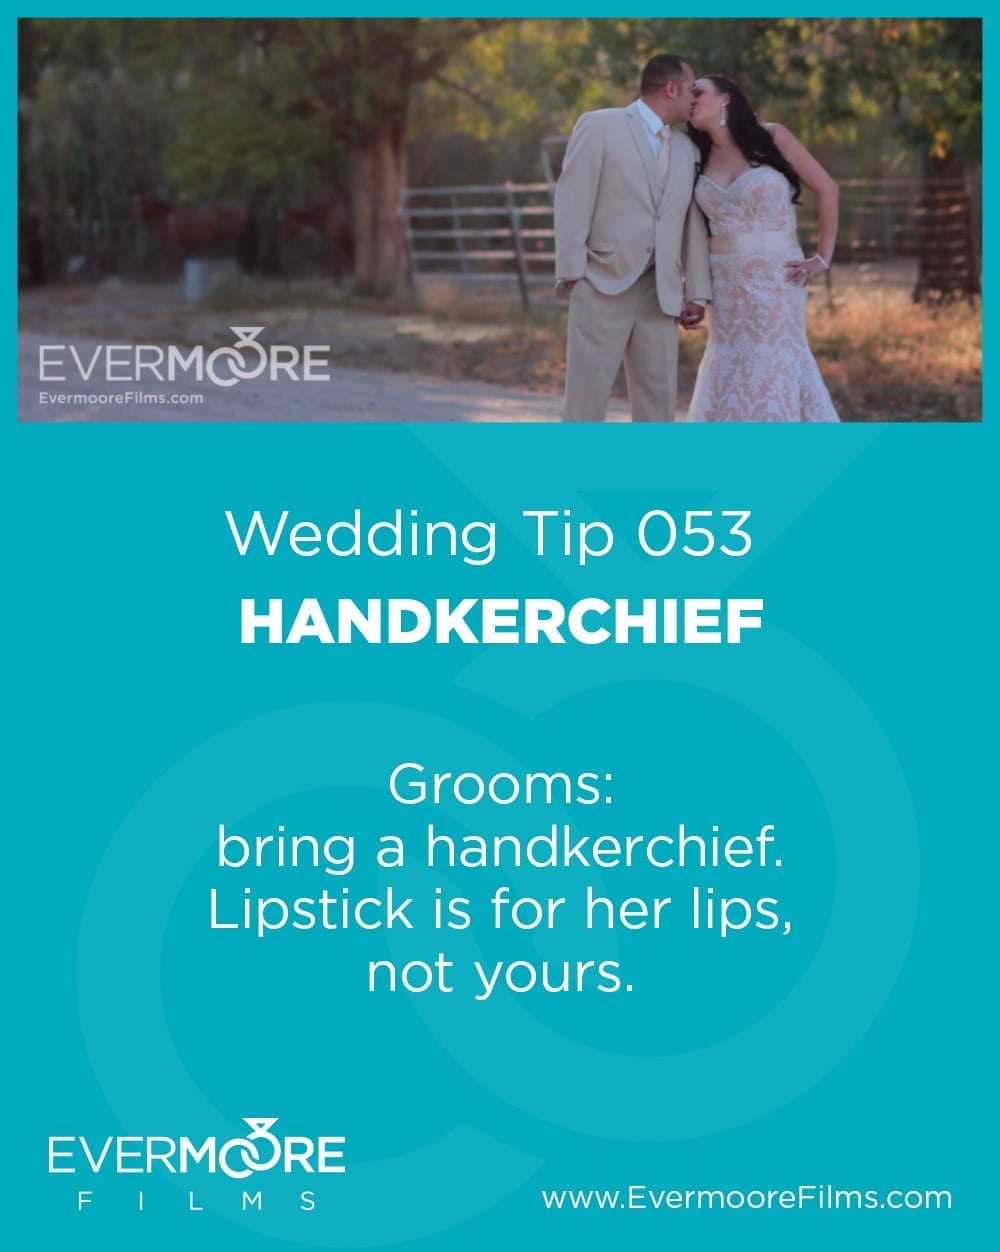 Handkerchief | Wedding Tip 053 | Evermoore Films | www.evermoorefilms.com/weddings